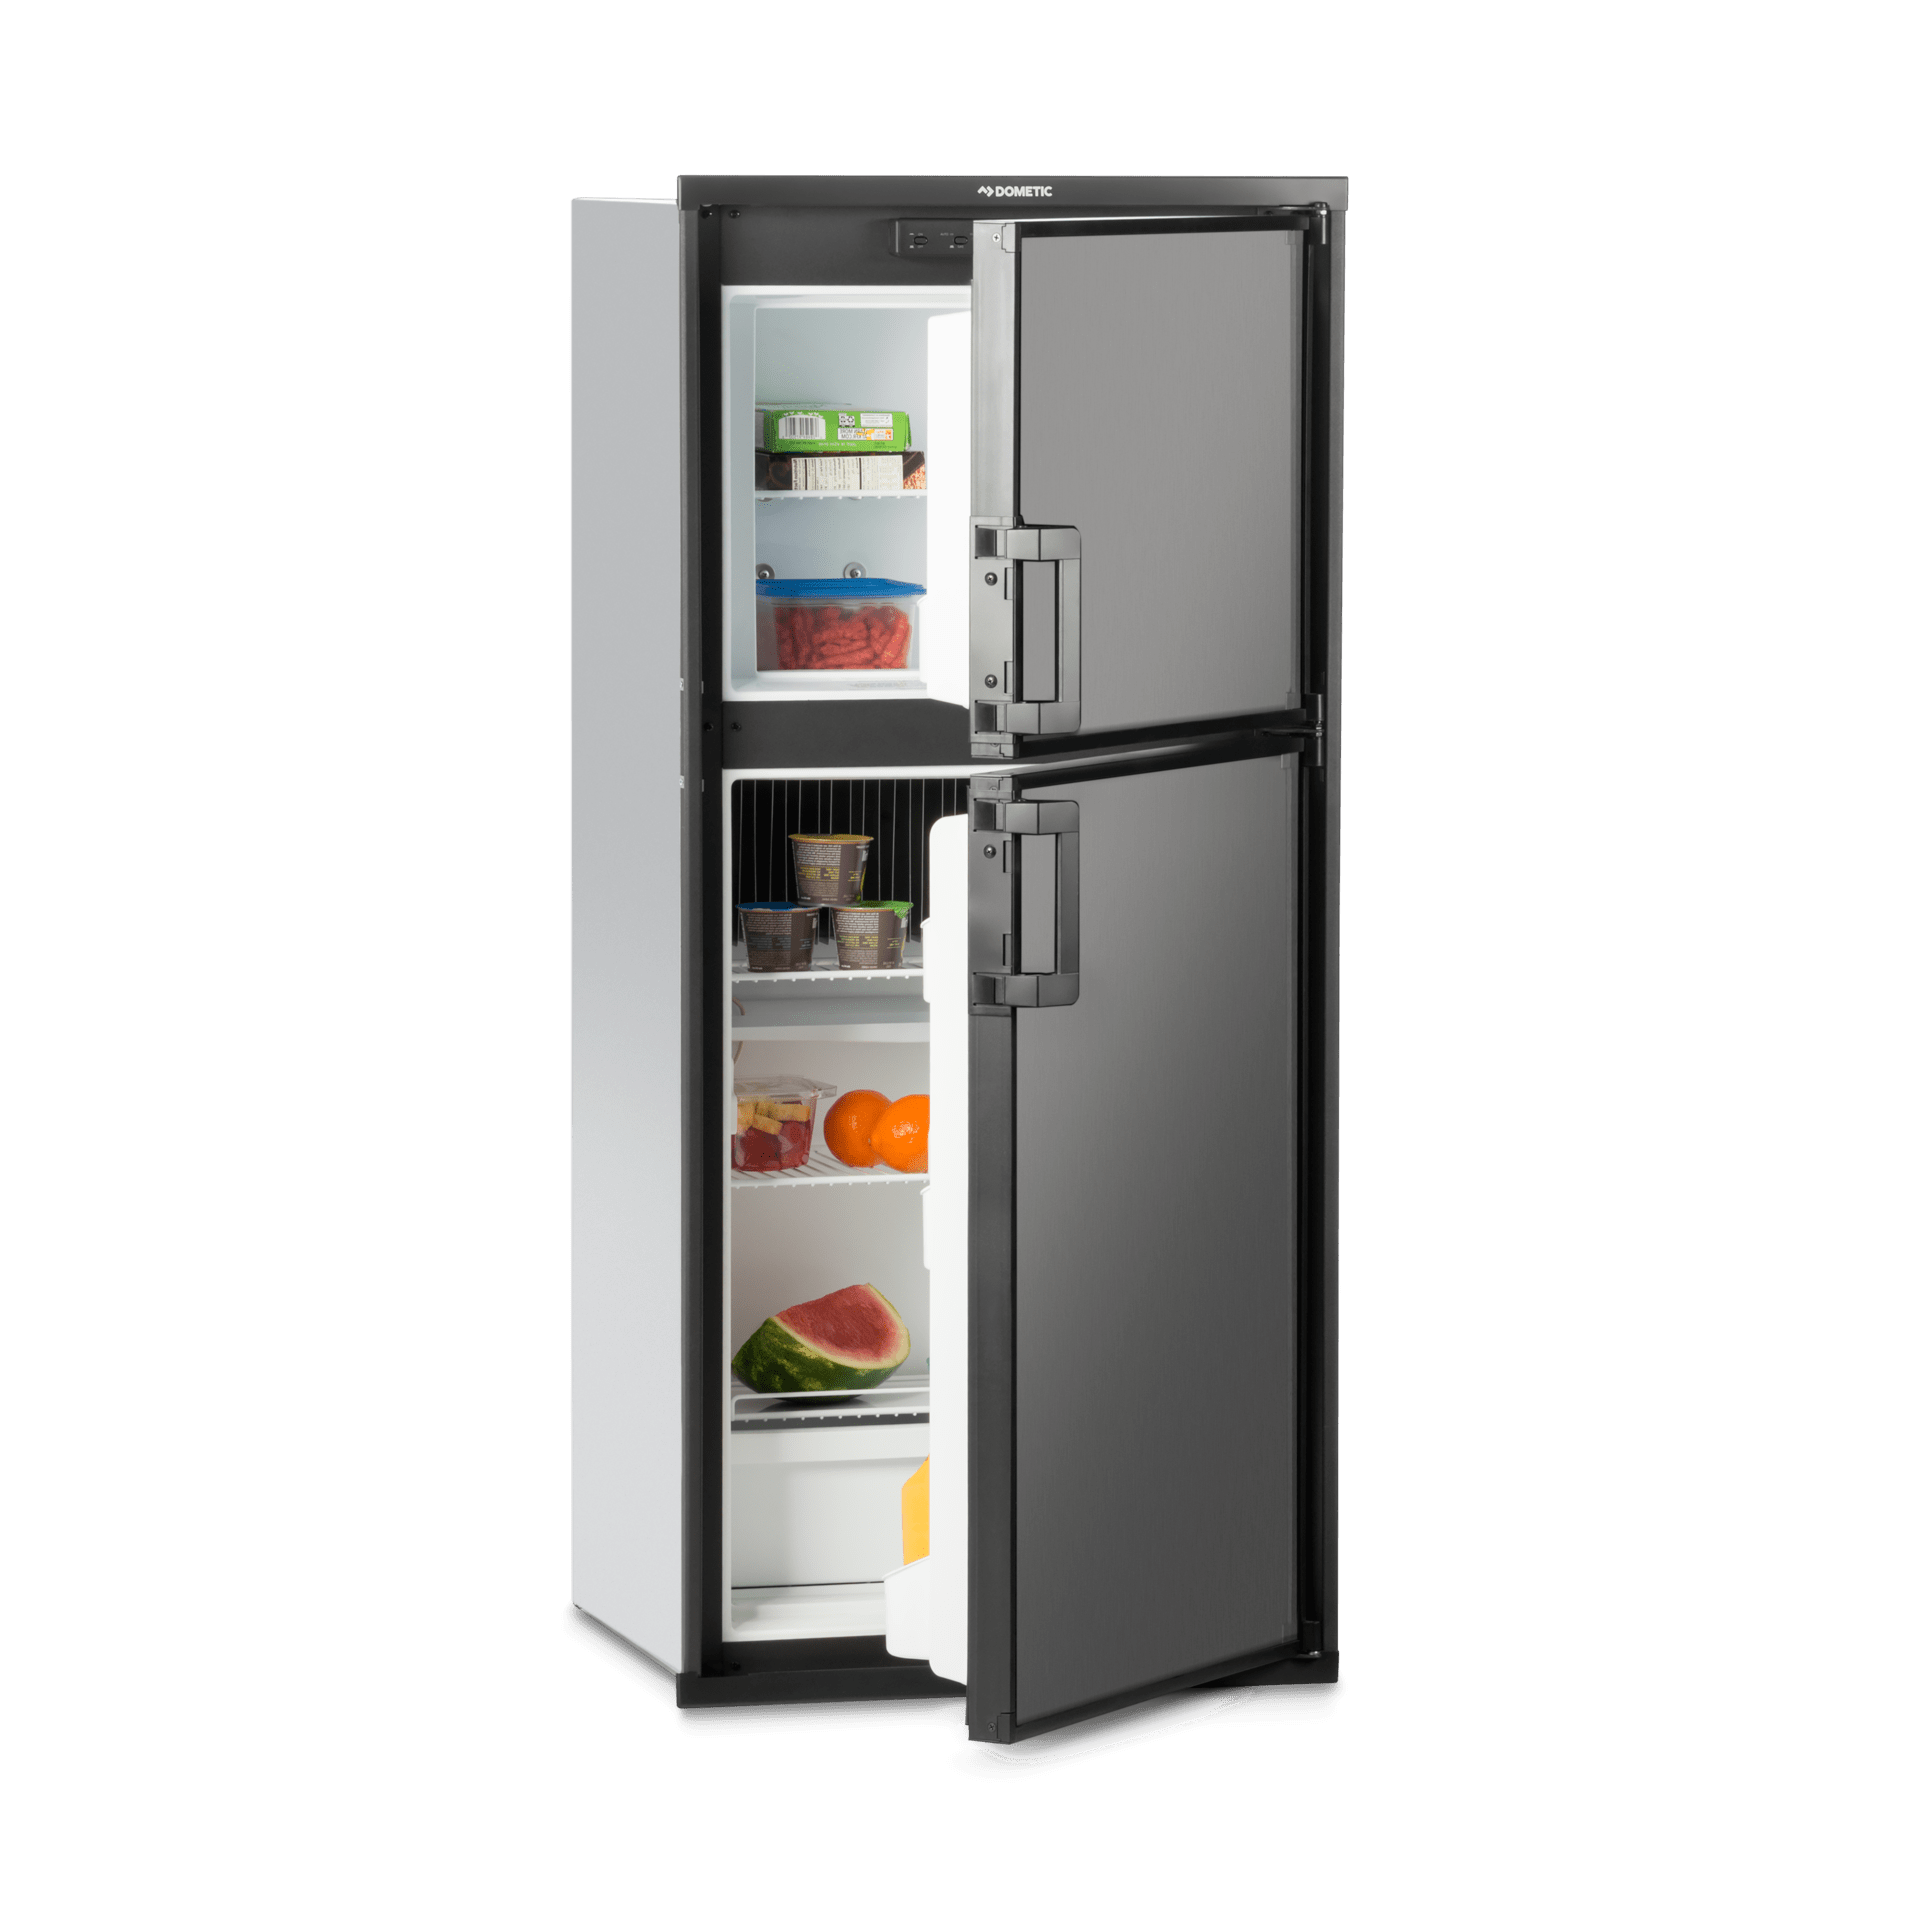 DIY Refrigerator Slide For Portable Refrigerator Freezers Like Dometic For  Your RV Camper Or Van 